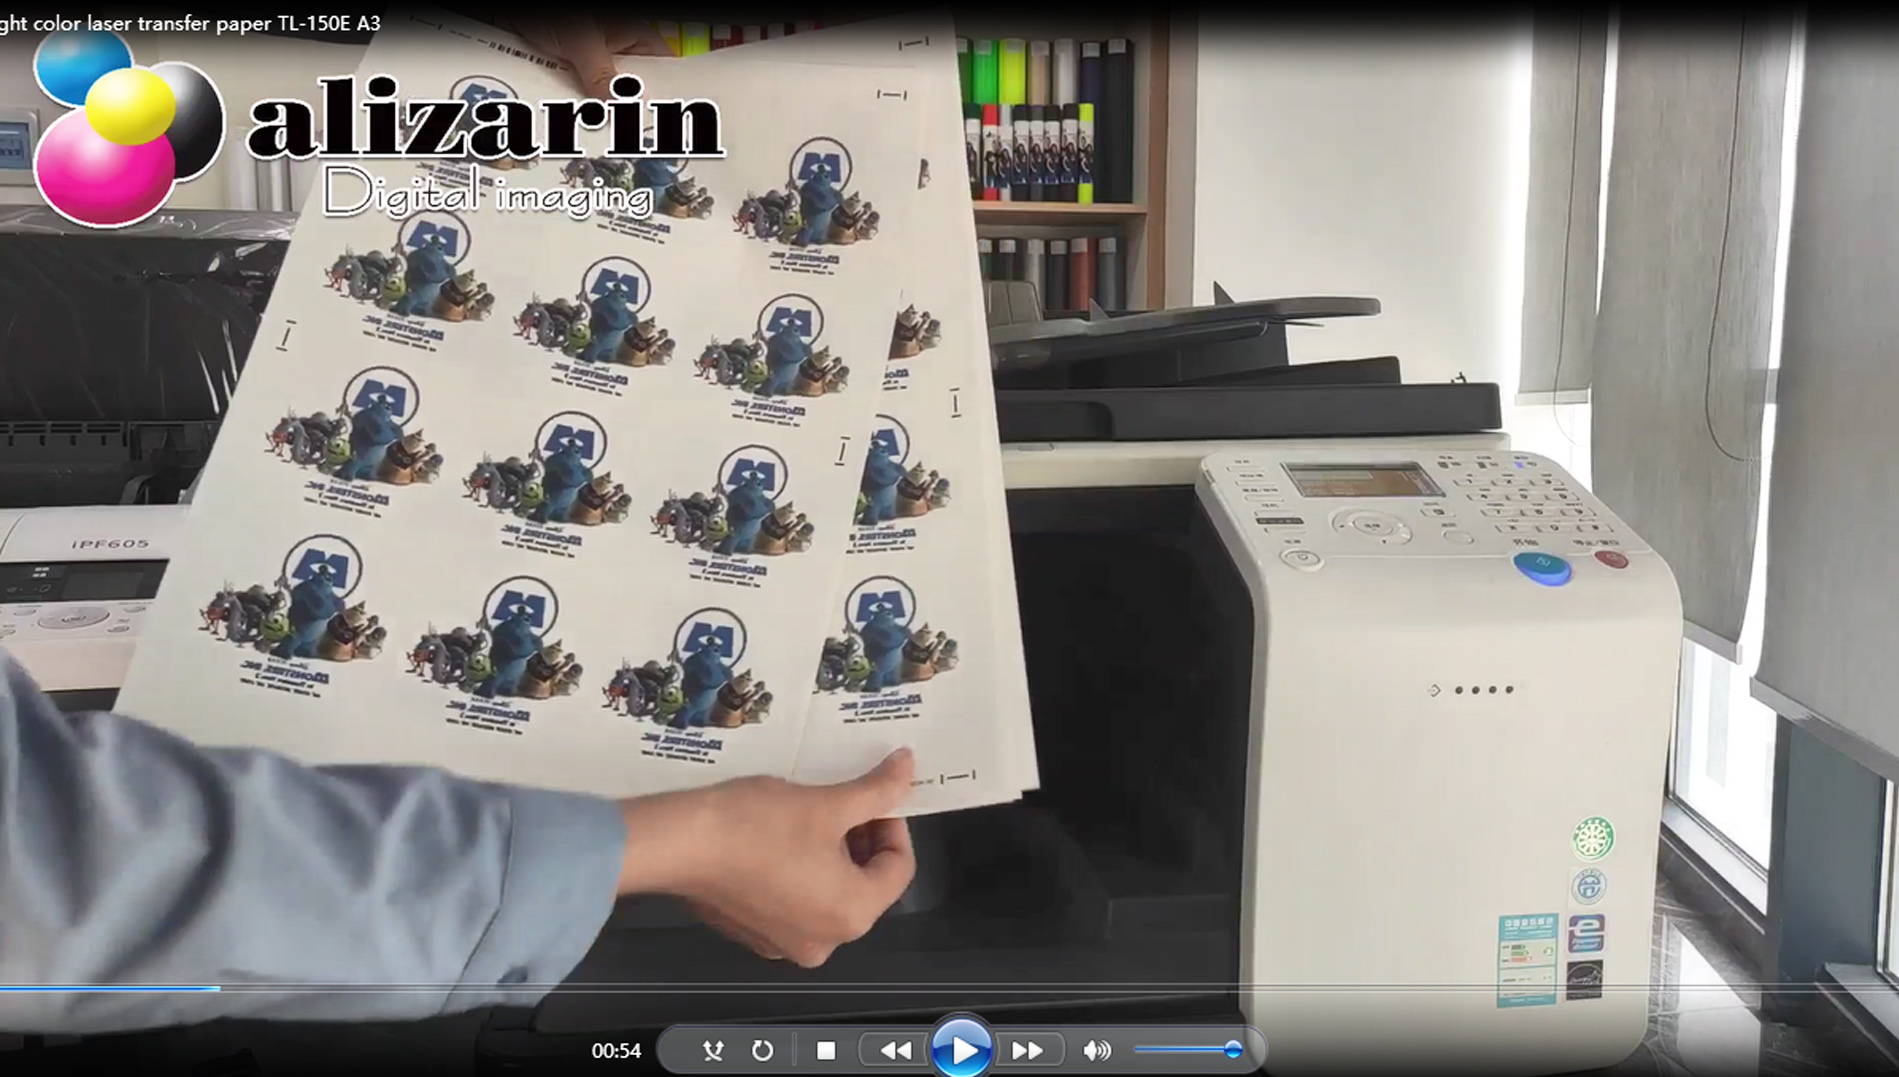 Konica Minolta C221 Continuous sheet to sheet printing， and cutting | TL-150E laser transfer paper | AlizarinChina.com